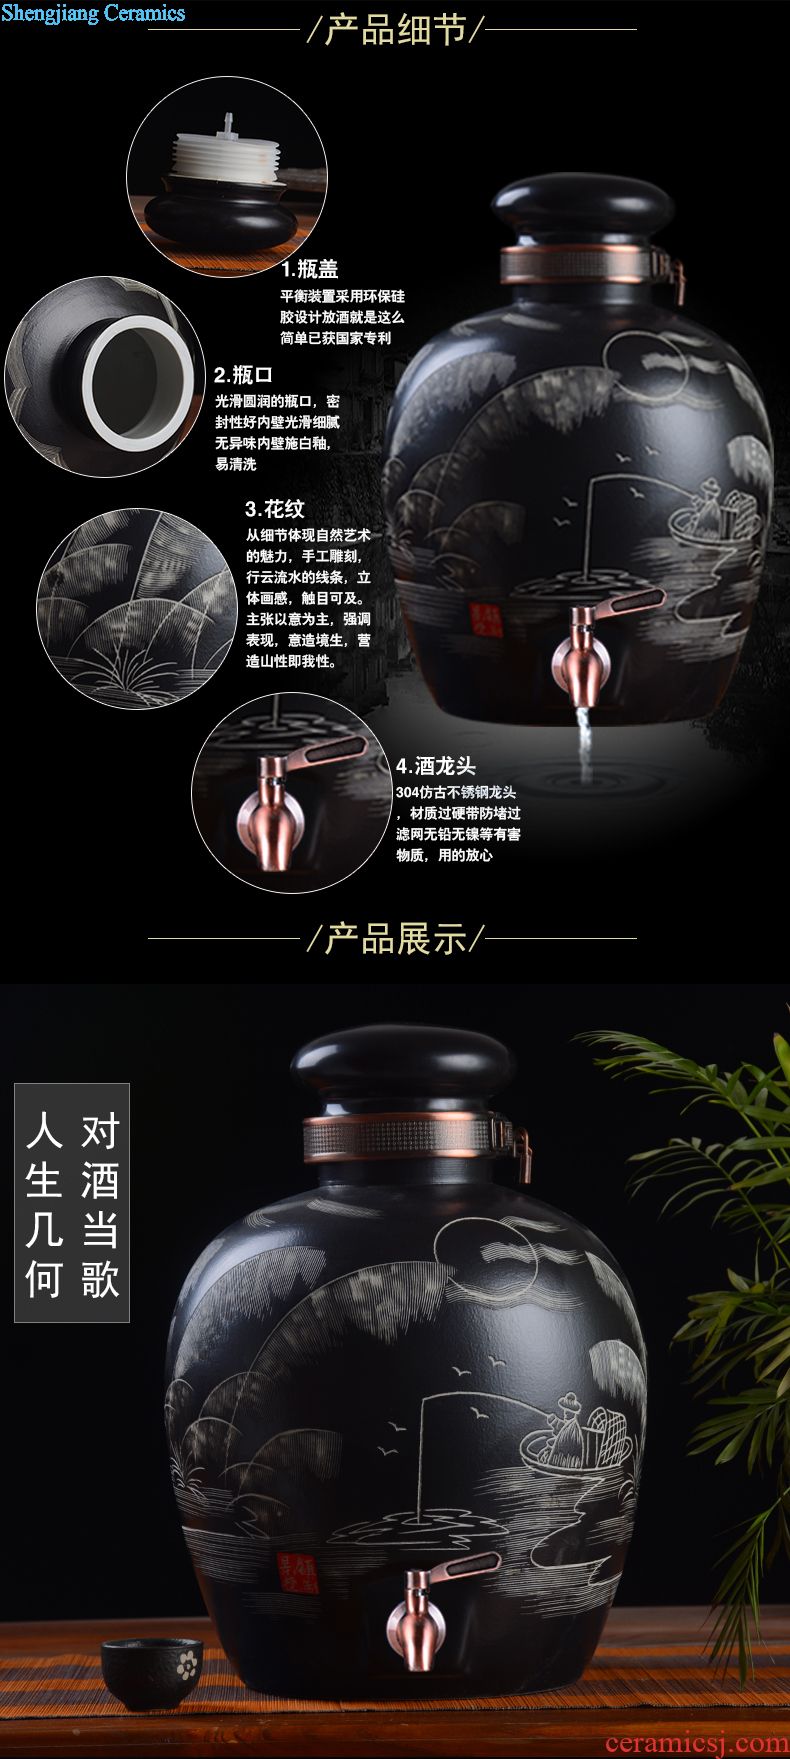 Jingdezhen ceramic foam glass jars with leading 20 jins 30 jins of 50 kg wine vintage wine jars with lock